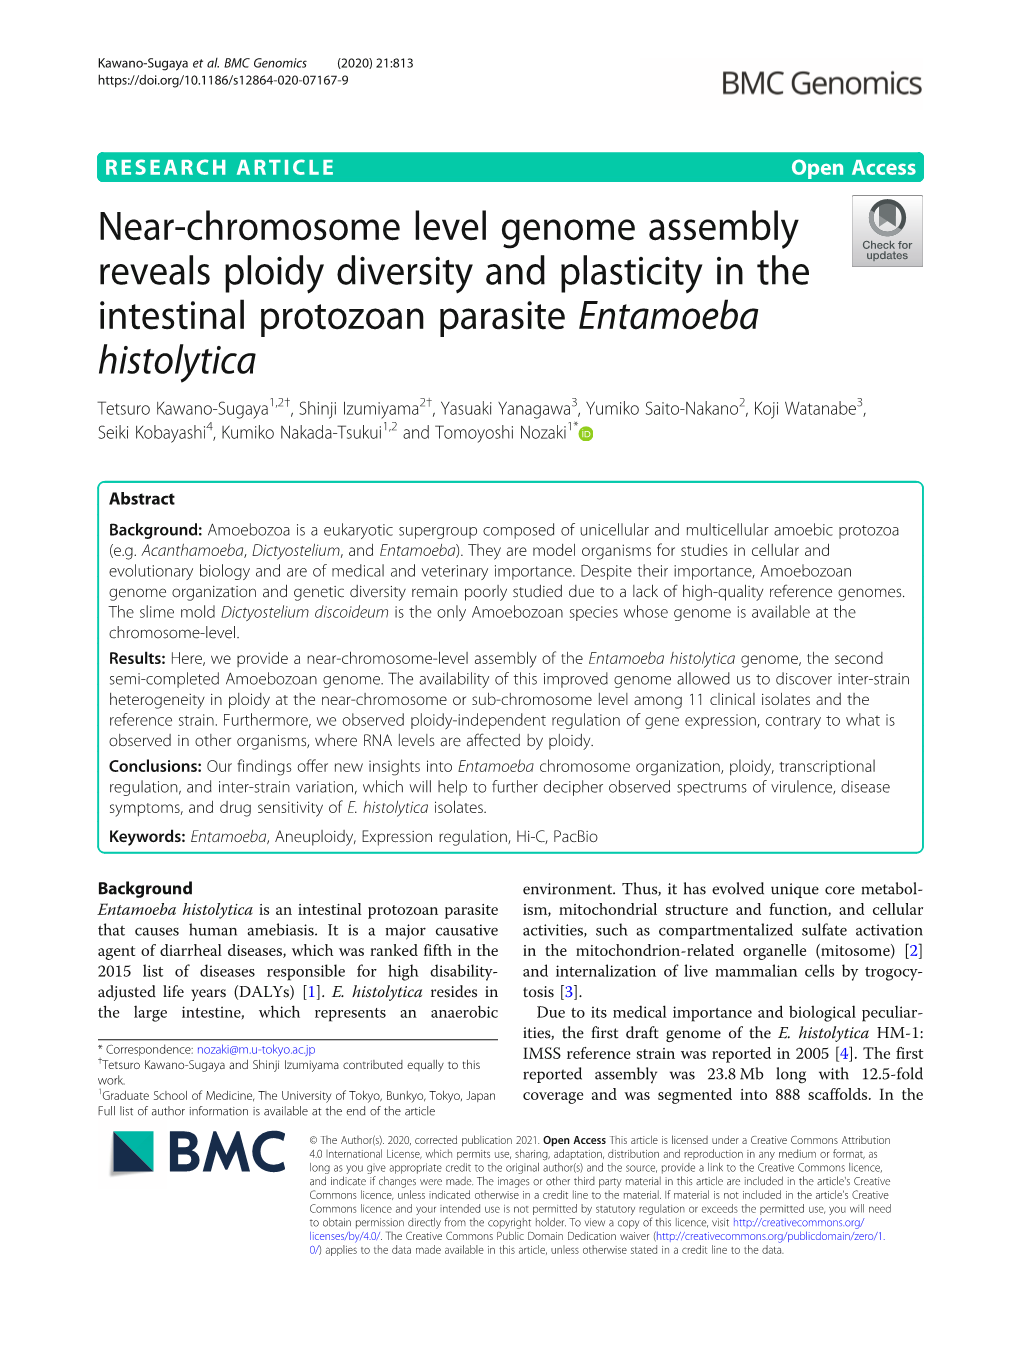 Near-Chromosome Level Genome Assembly Reveals Ploidy Diversity and Plasticity in the Intestinal Protozoan Parasite Entamoeba Histolytica